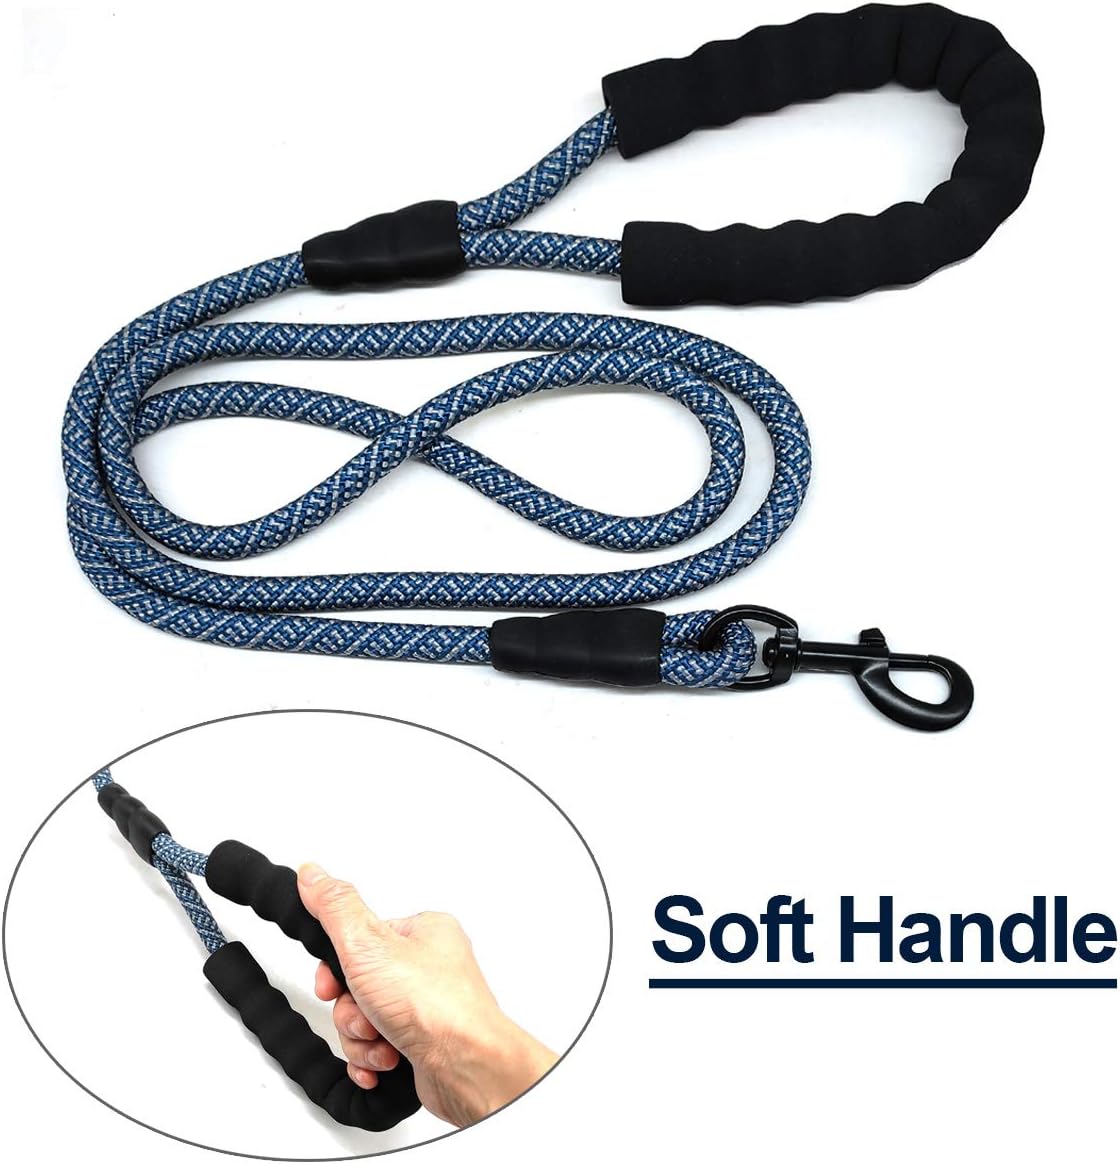 heavy duty rope dog leash, red, 1/2" * 6'